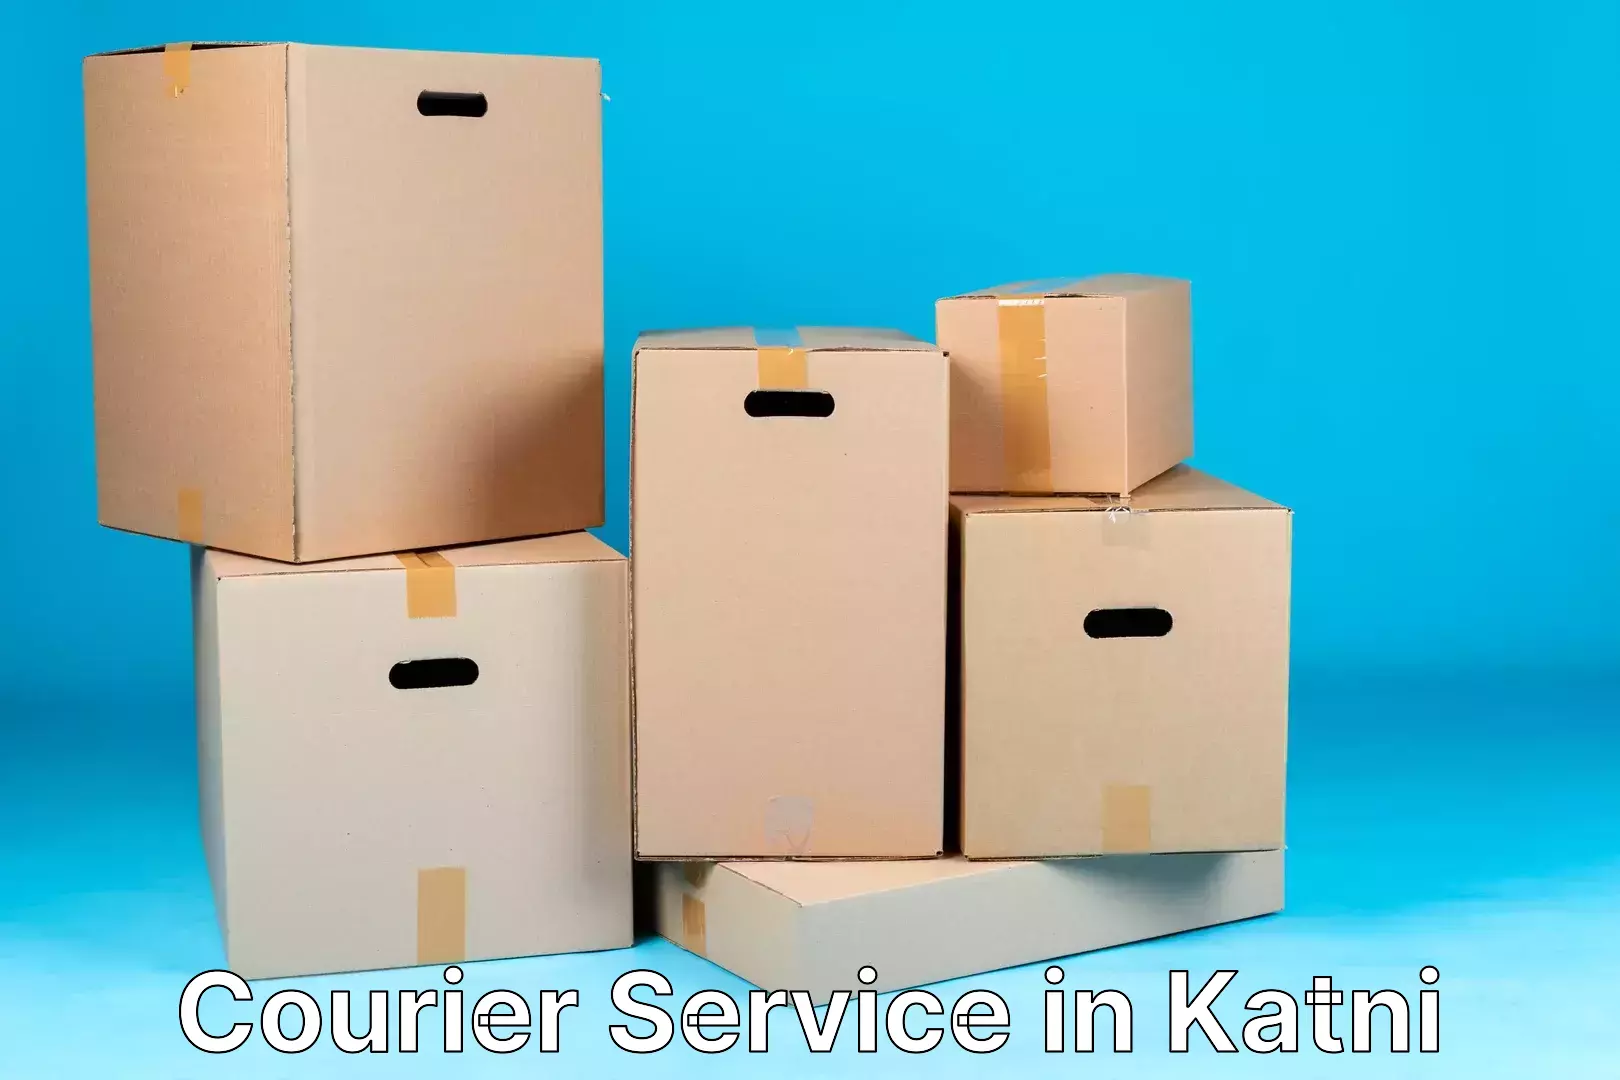 Courier service innovation in Katni